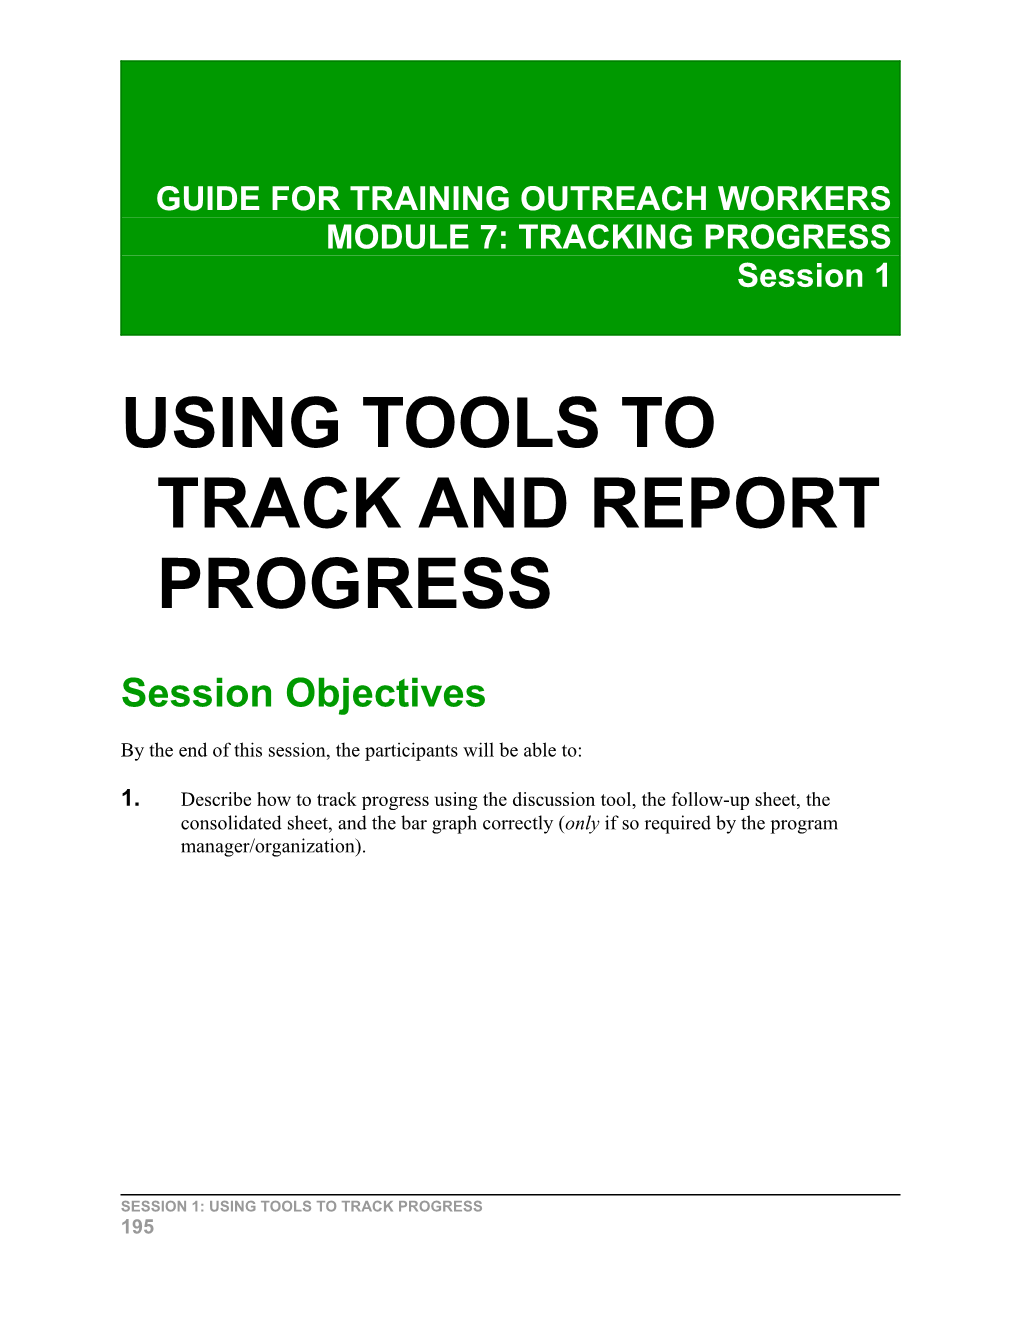 Using Toolsto Track and Report Progress